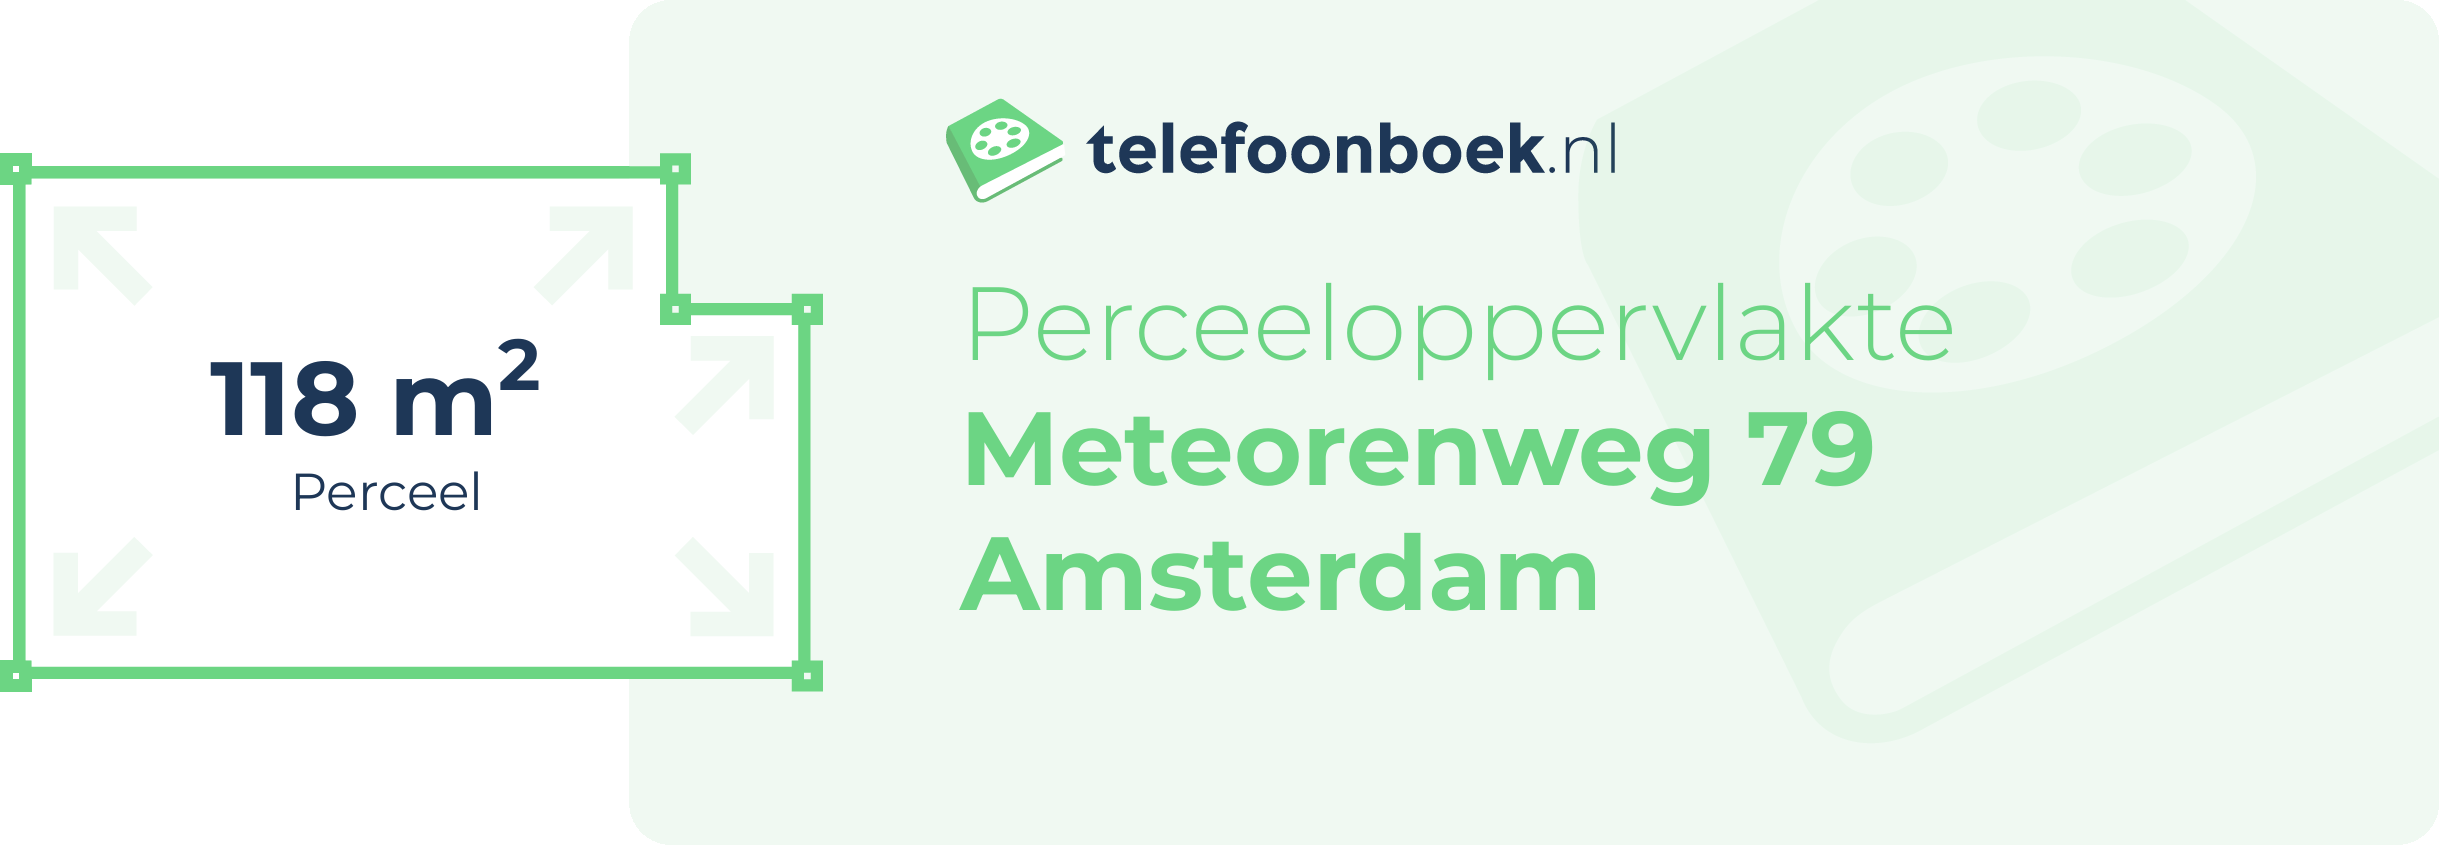 Perceeloppervlakte Meteorenweg 79 Amsterdam